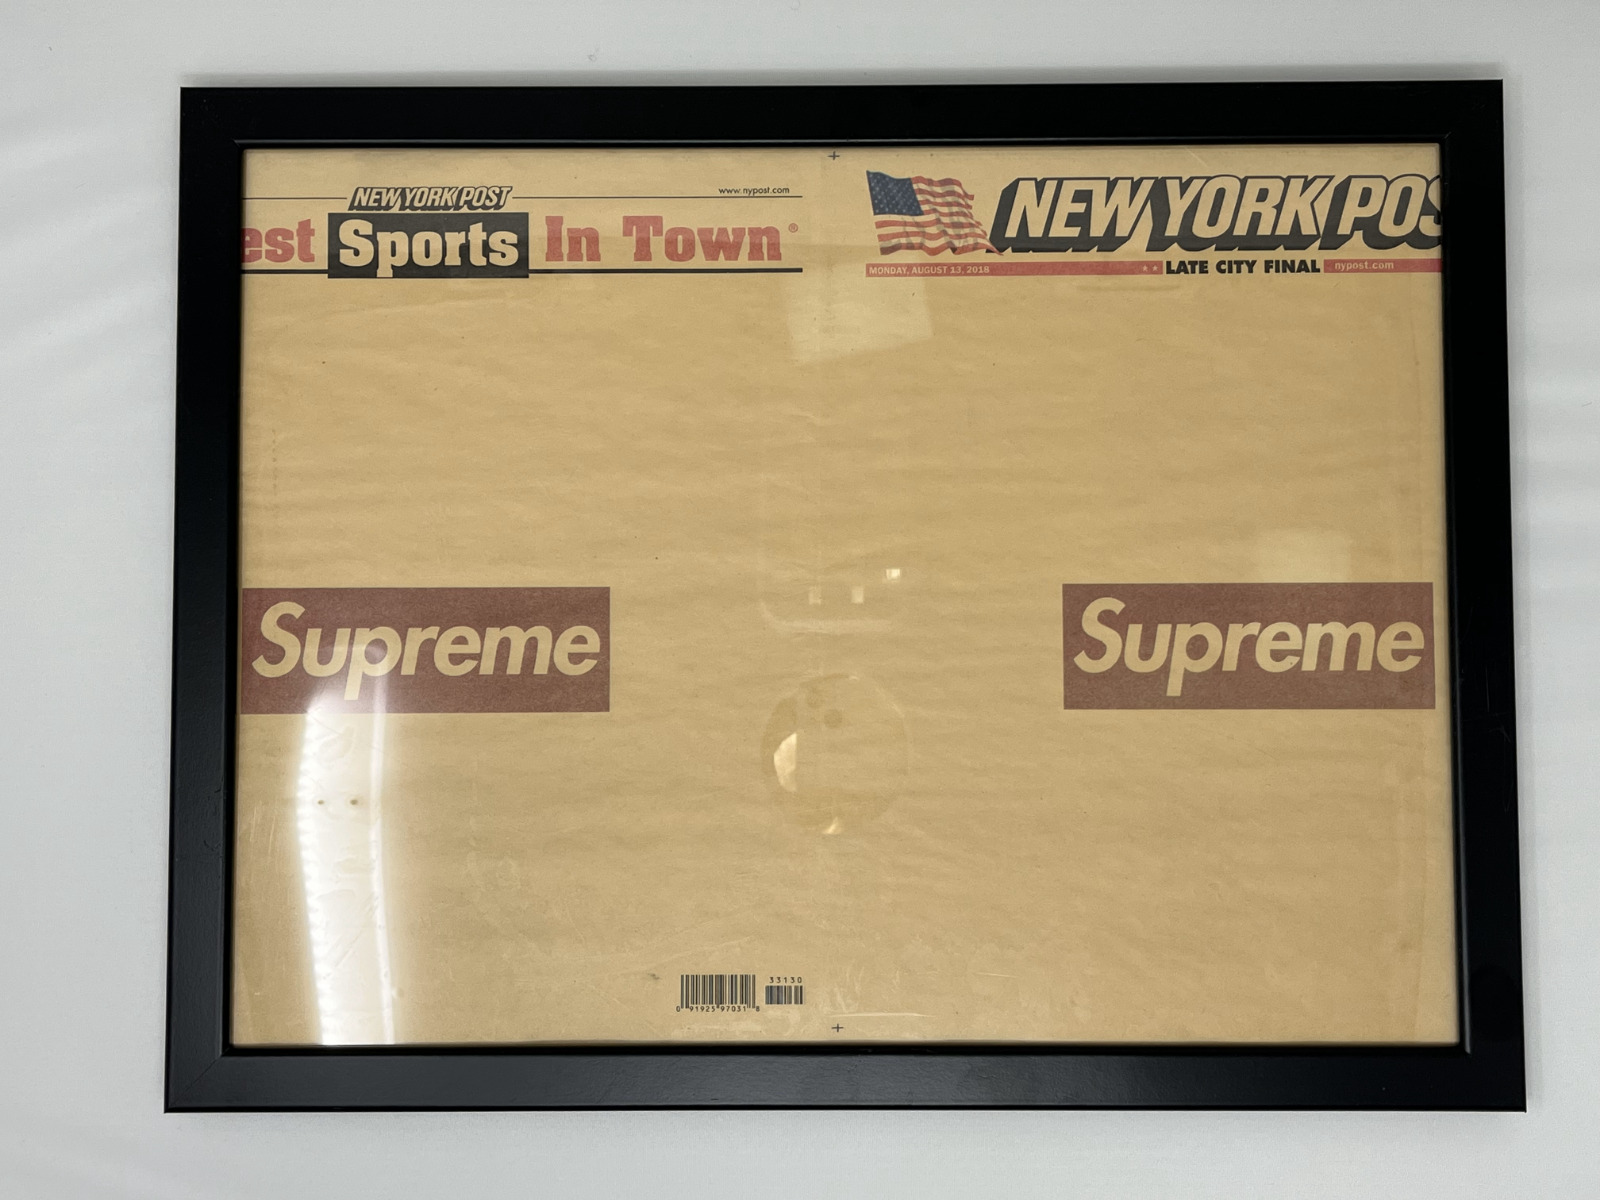 Supreme Newspaper Framed - New York Post newspaper Collectable